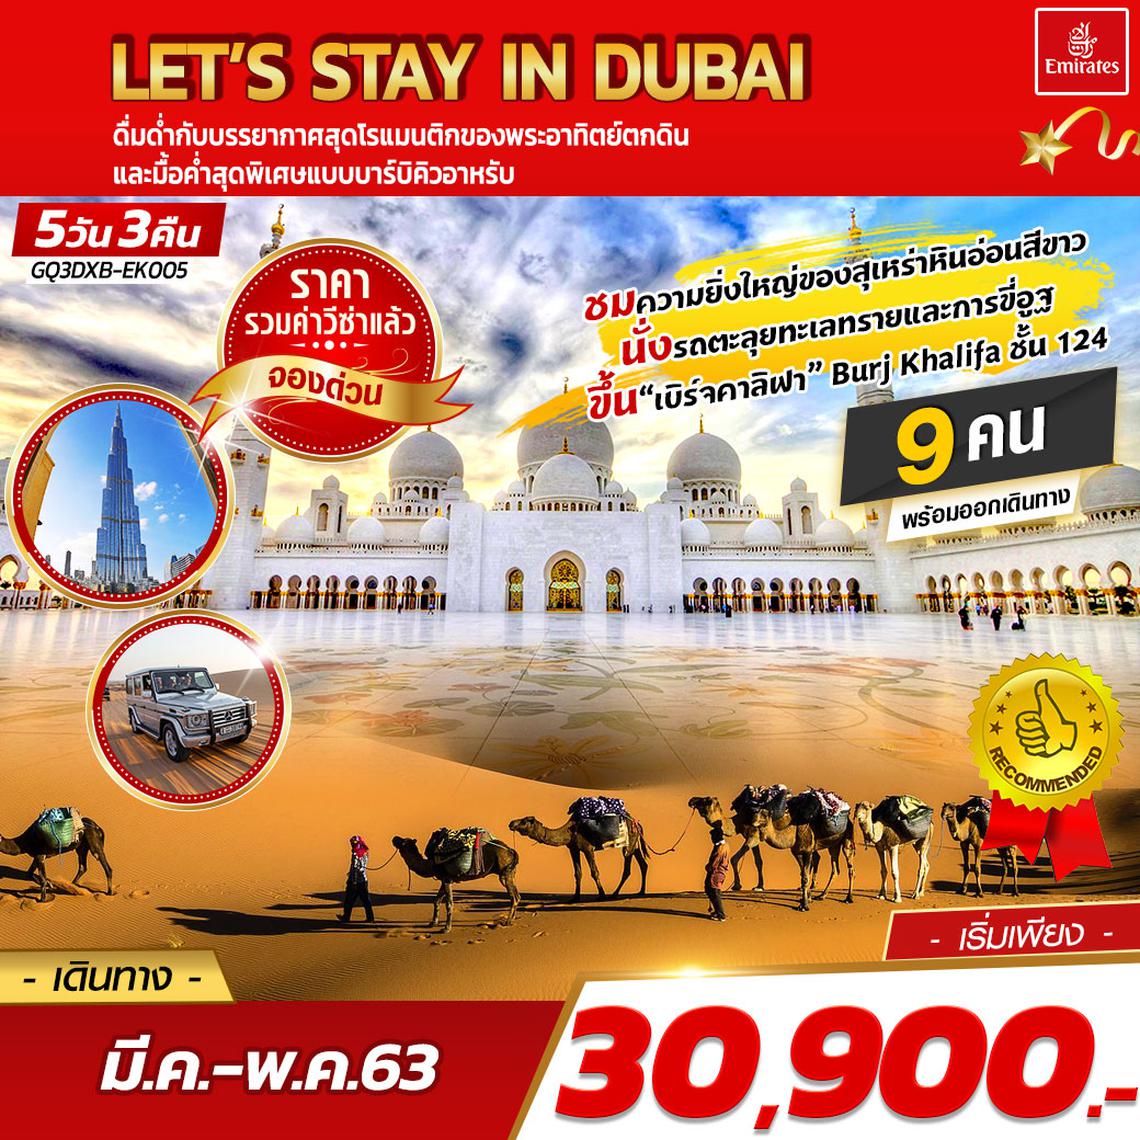 LET’S STAY IN DUBAI ดูไบ 5 วัน 3 คืน  โดยสายการบินเอมิเรตส์ (EK)